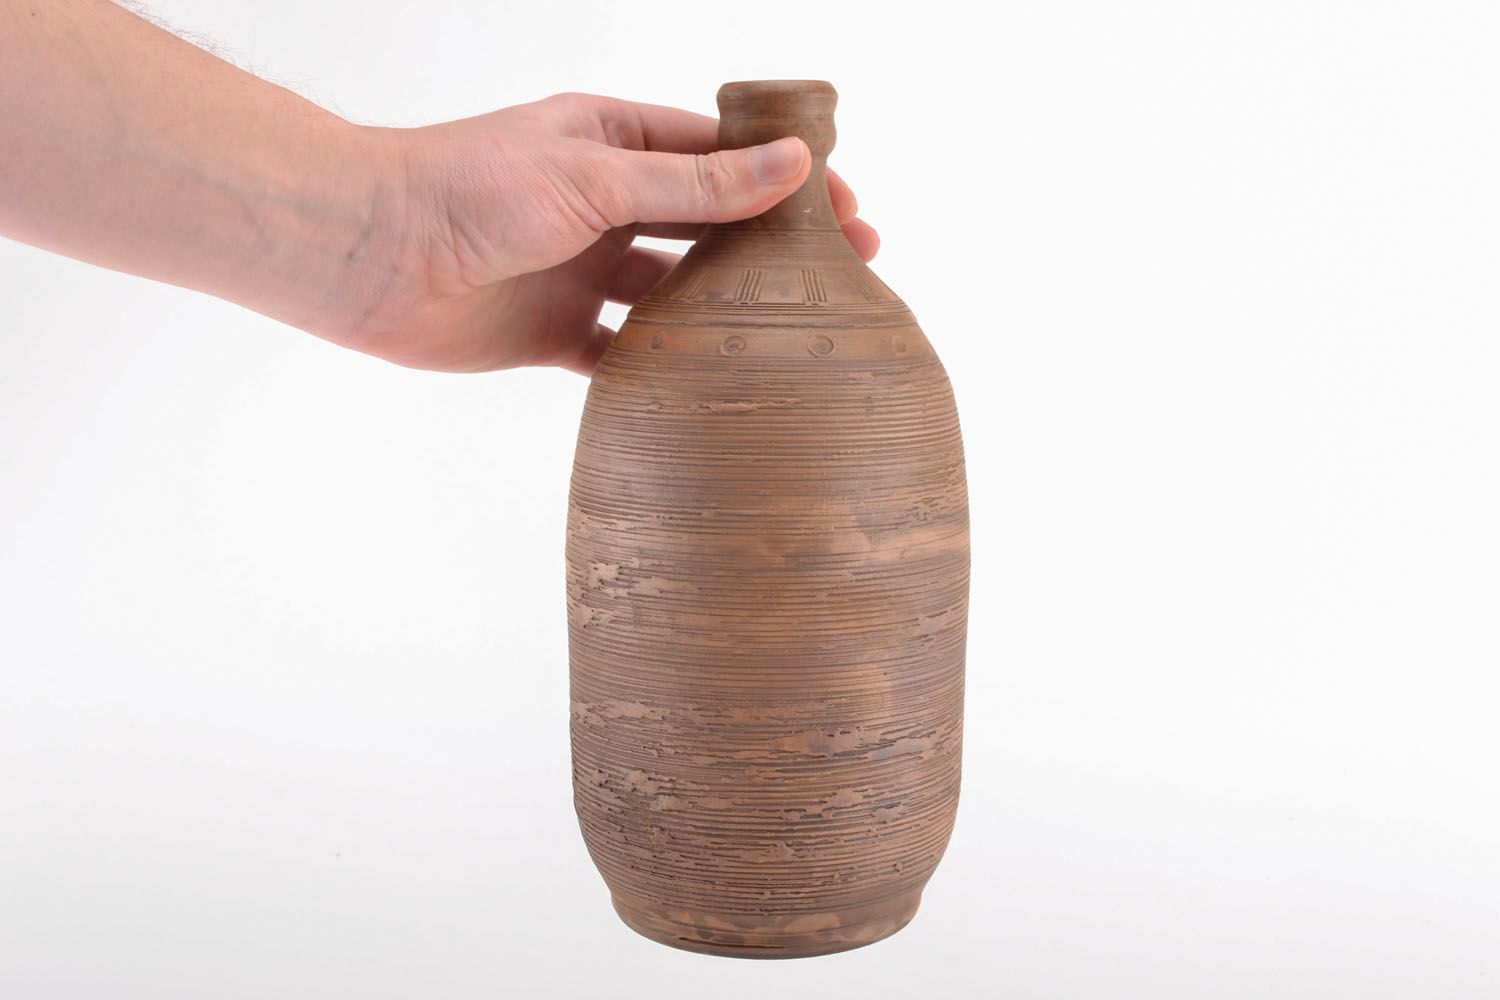 60 oz ceramic bottle shape pitcher made of white clay 2,11 lb photo 1